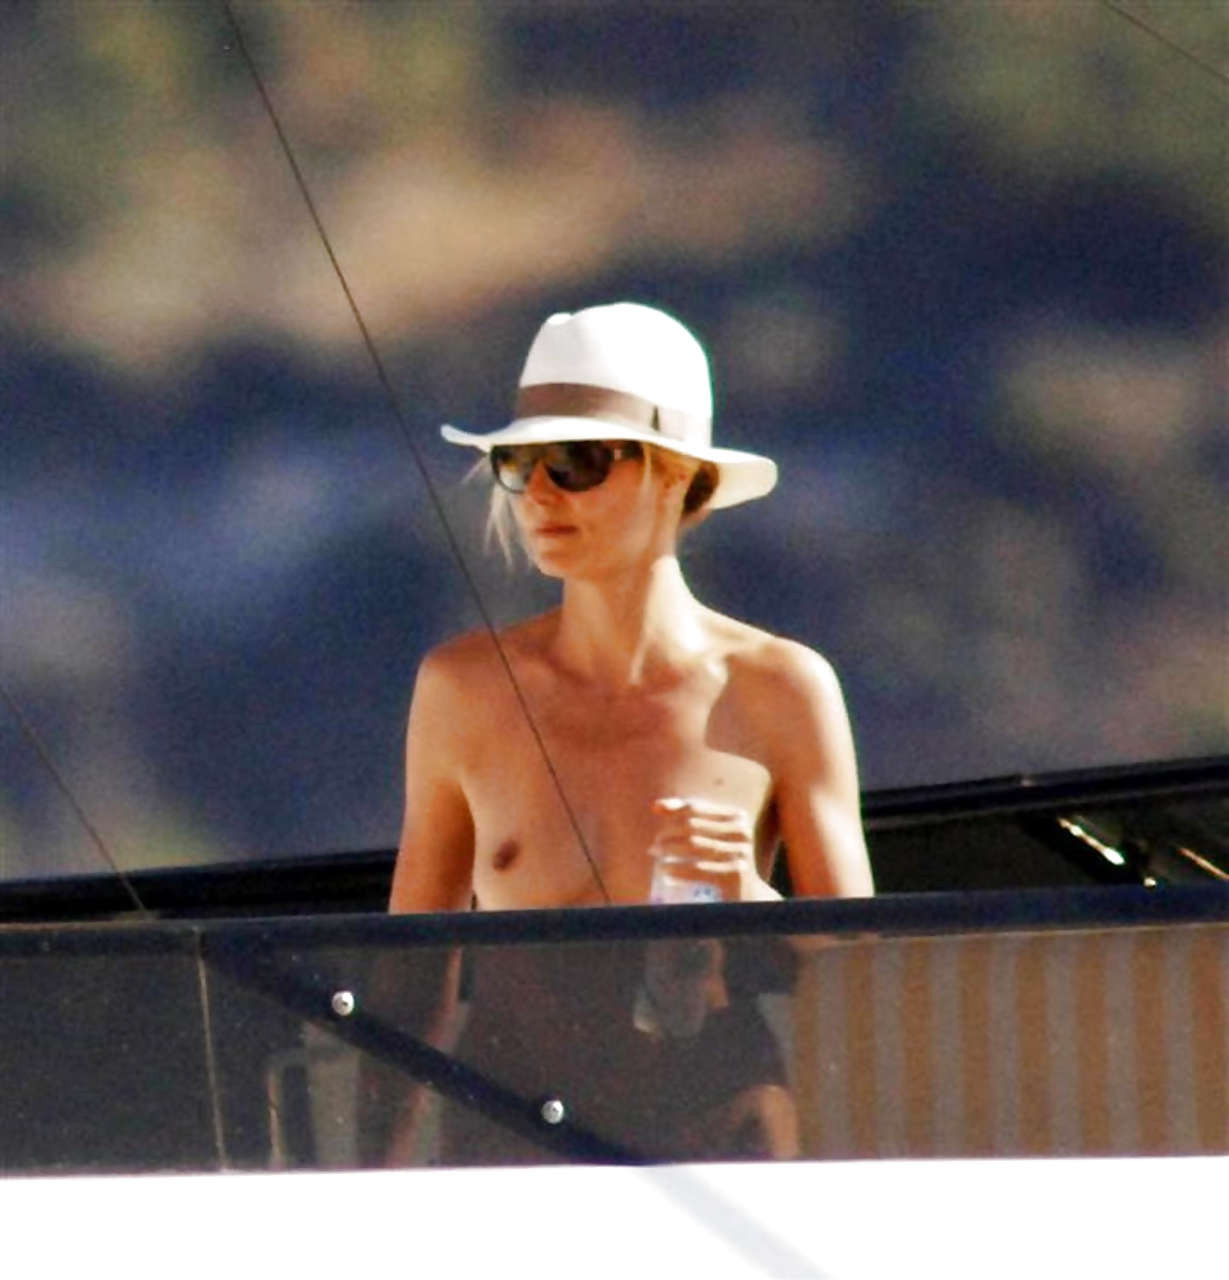 Heidi Klum caught enjoy sunbathing topless on yacht by paprazzi and posing sexy #75295224